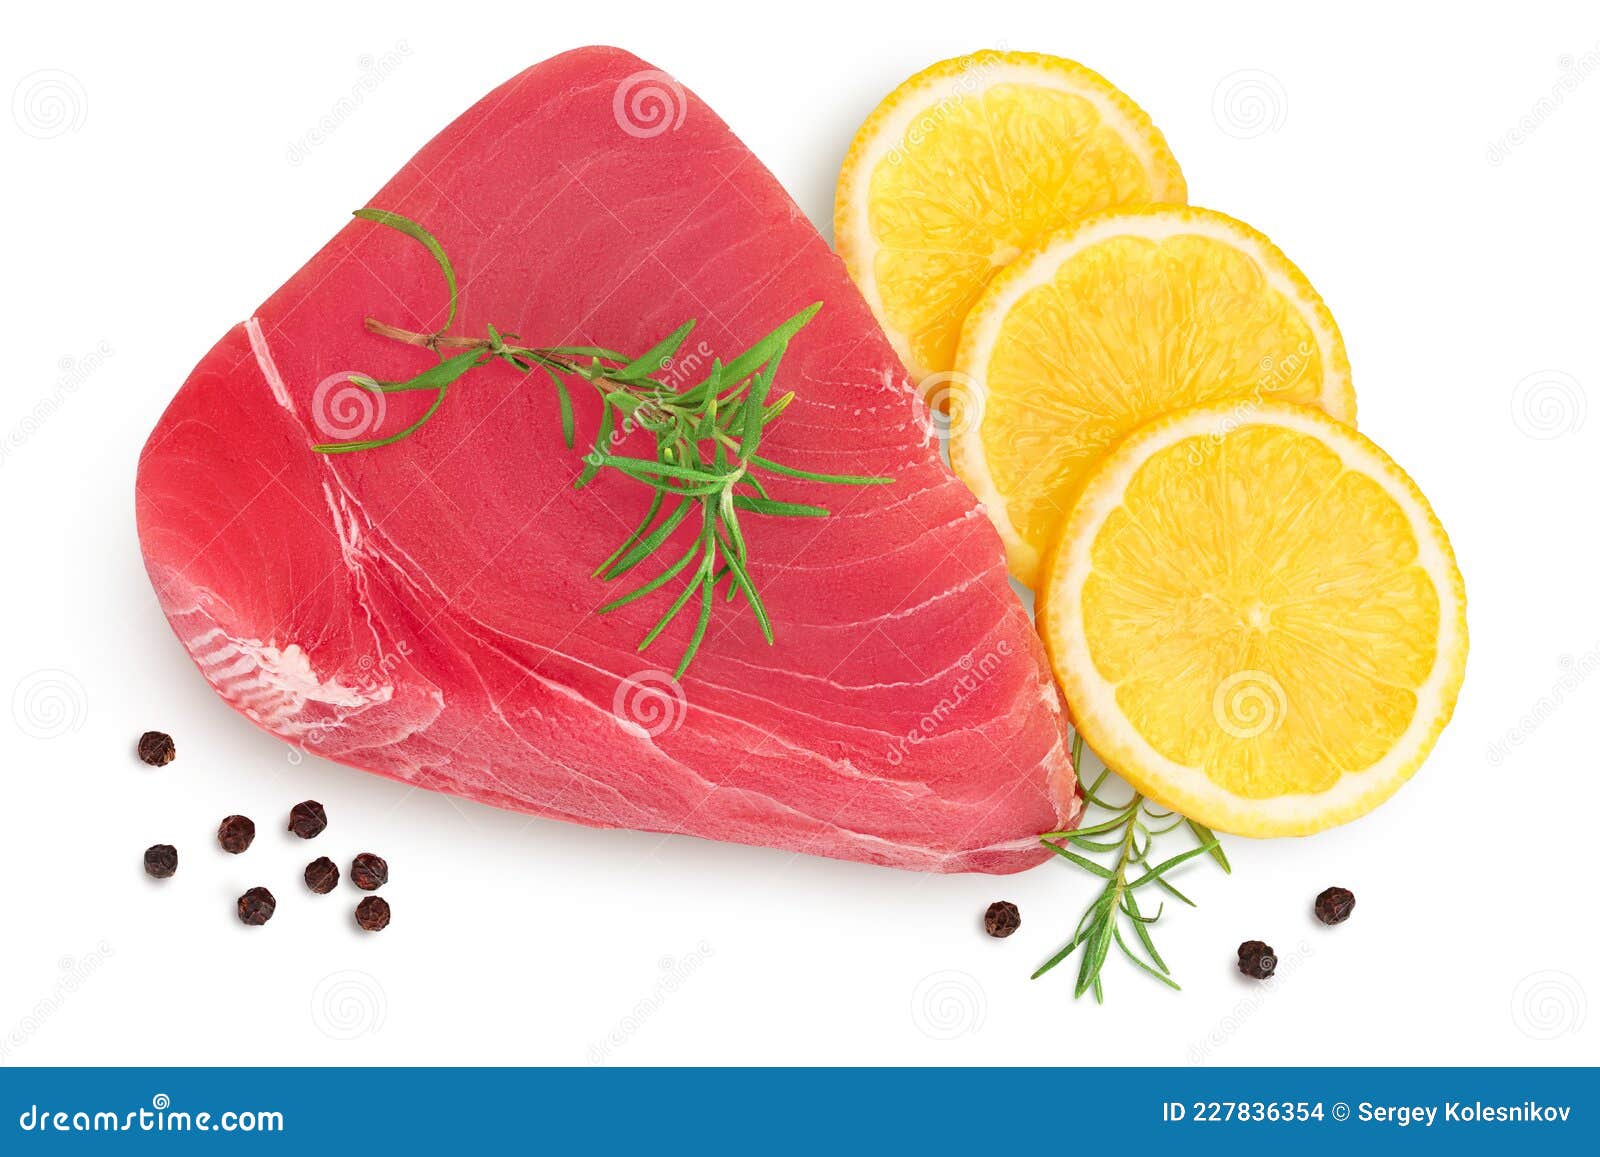 Fresh Tuna Fish Fillet Steak With Rosemary Lemon And Peppercorns